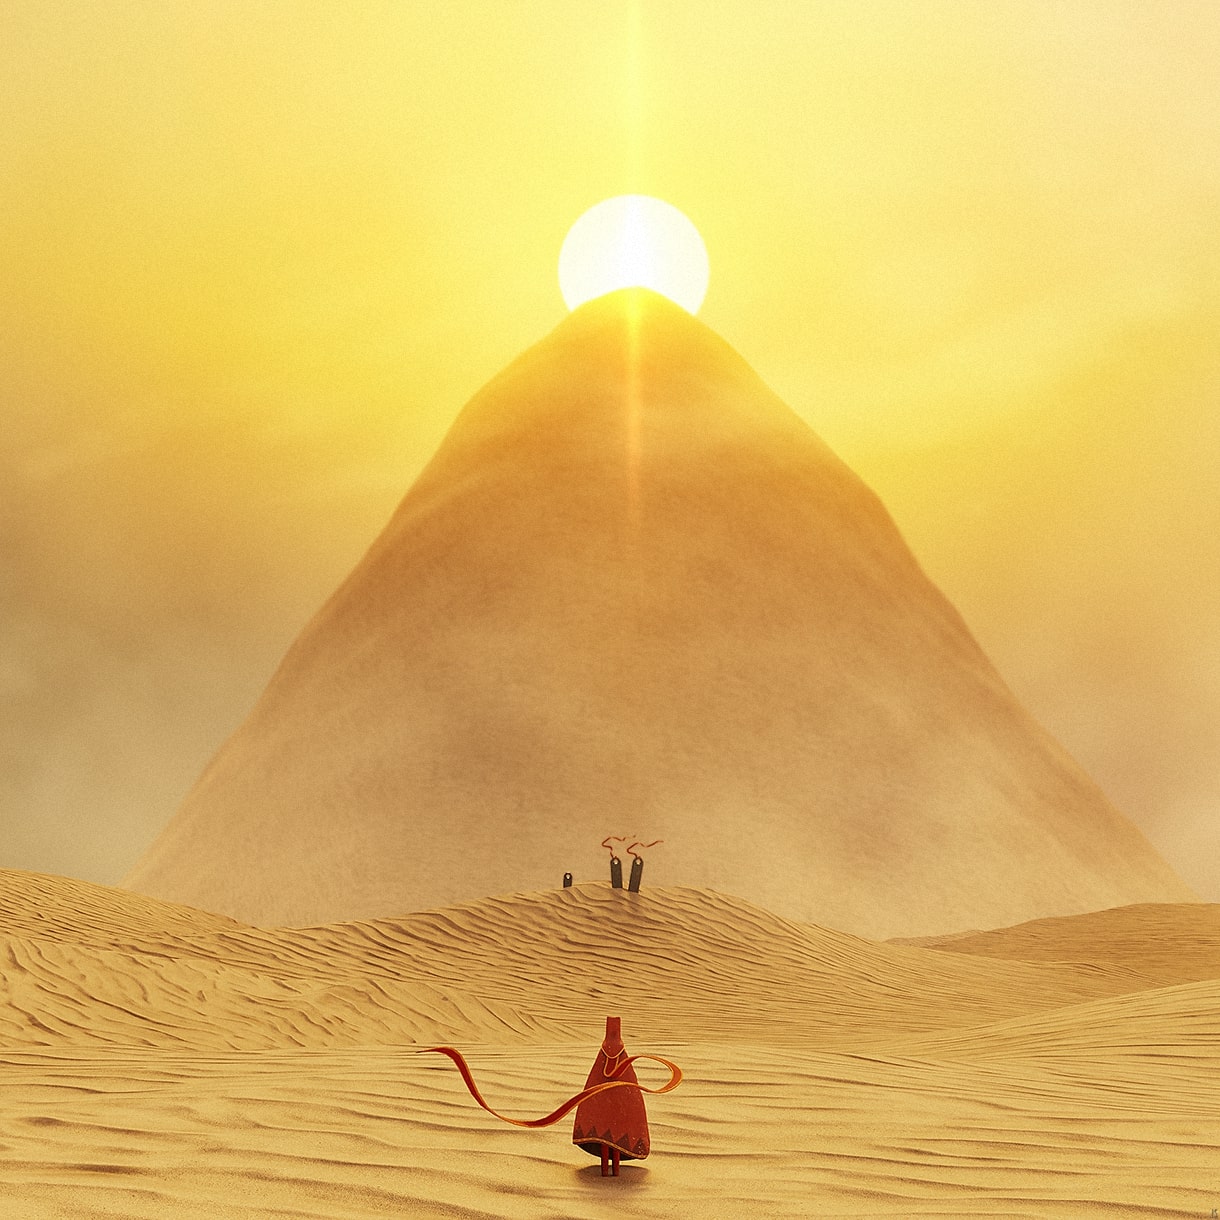 Journey r. Джорни игра. Journey (игра, 2012). Джорни путешествие игра. Пустыня арт.